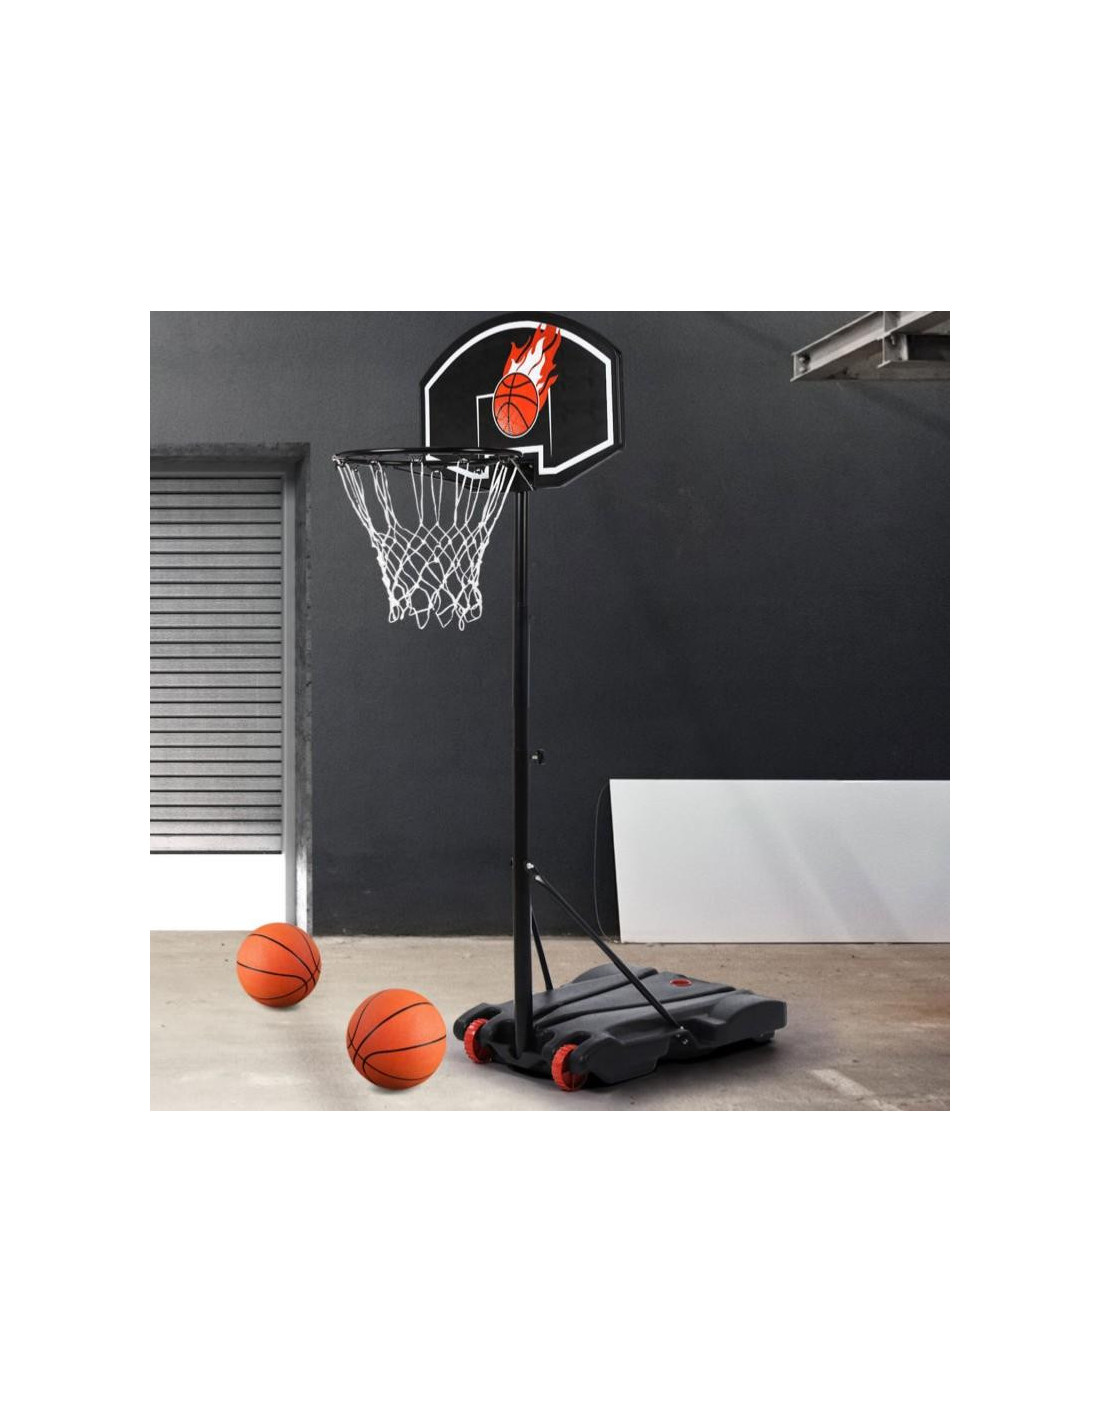 Panier de basketball avec pied fixe en acier